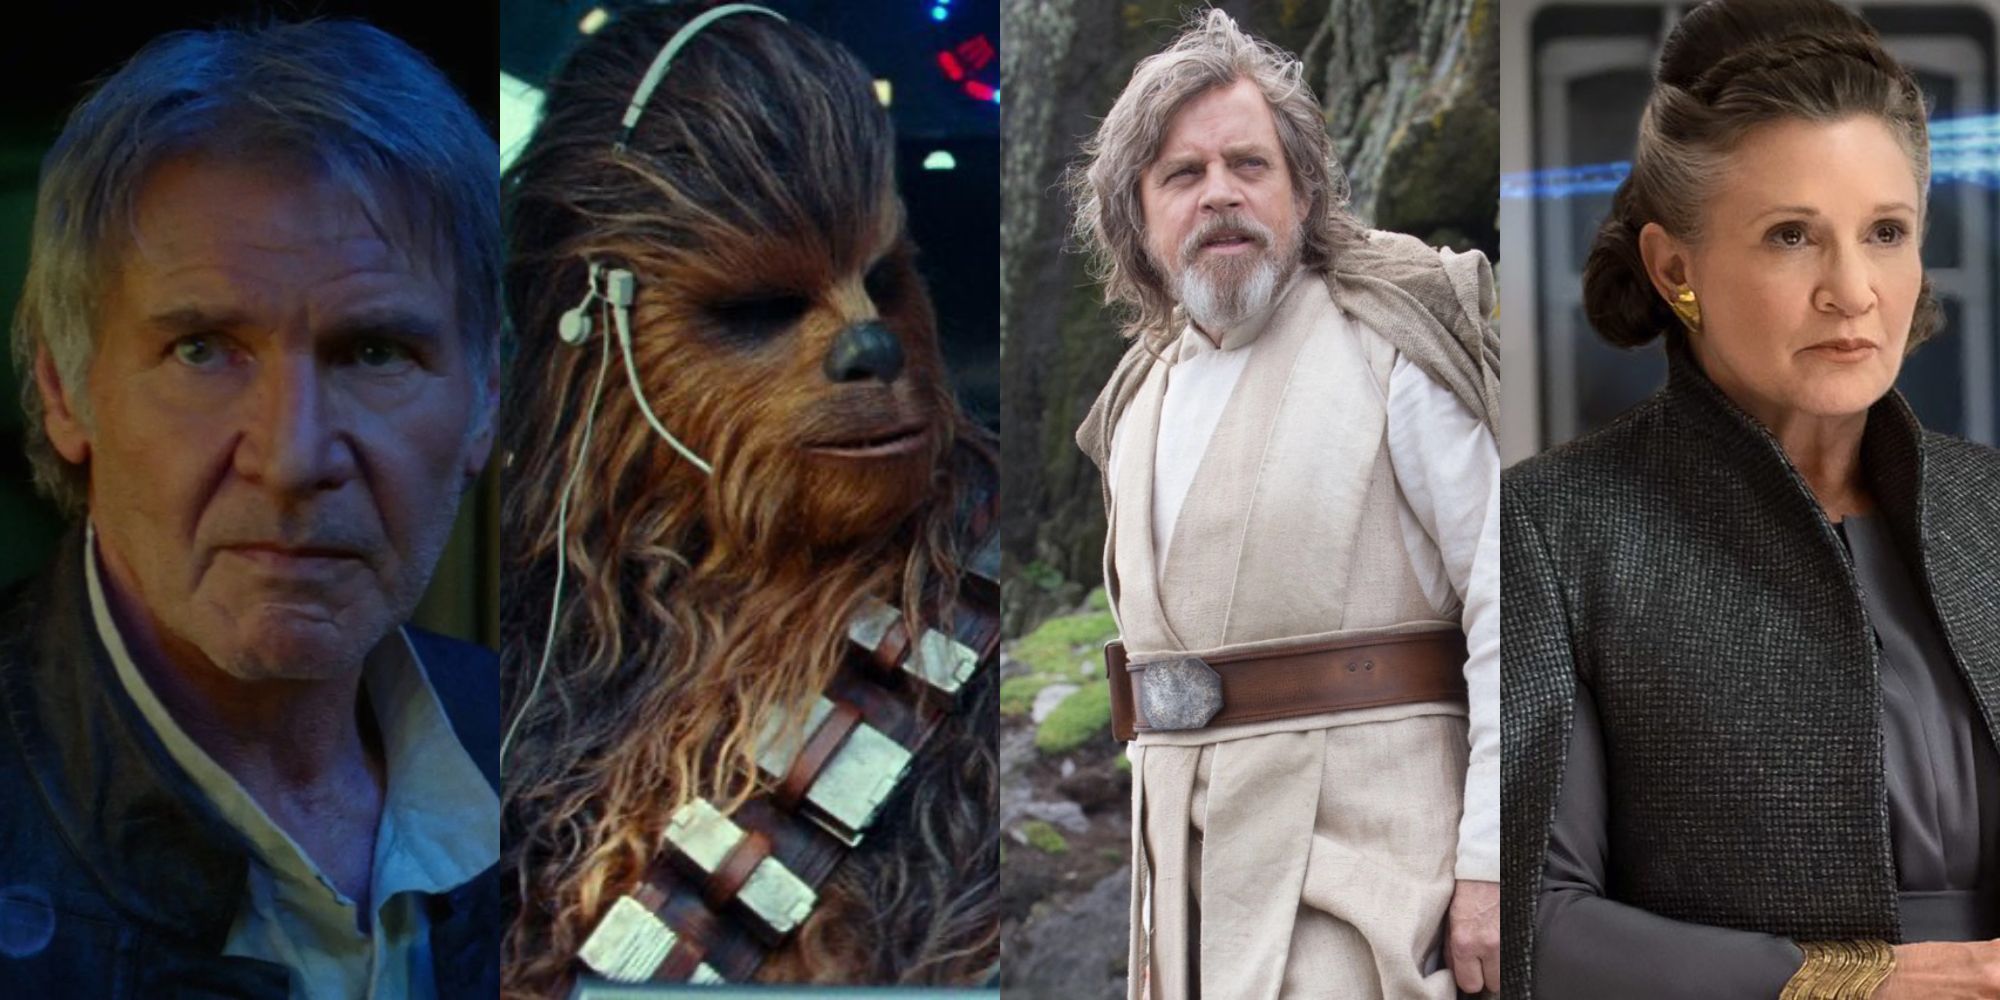 Image fractionnée montrant Han Solo, Chewbacca, et Luke et Leia Skywalker dans Star Wars.